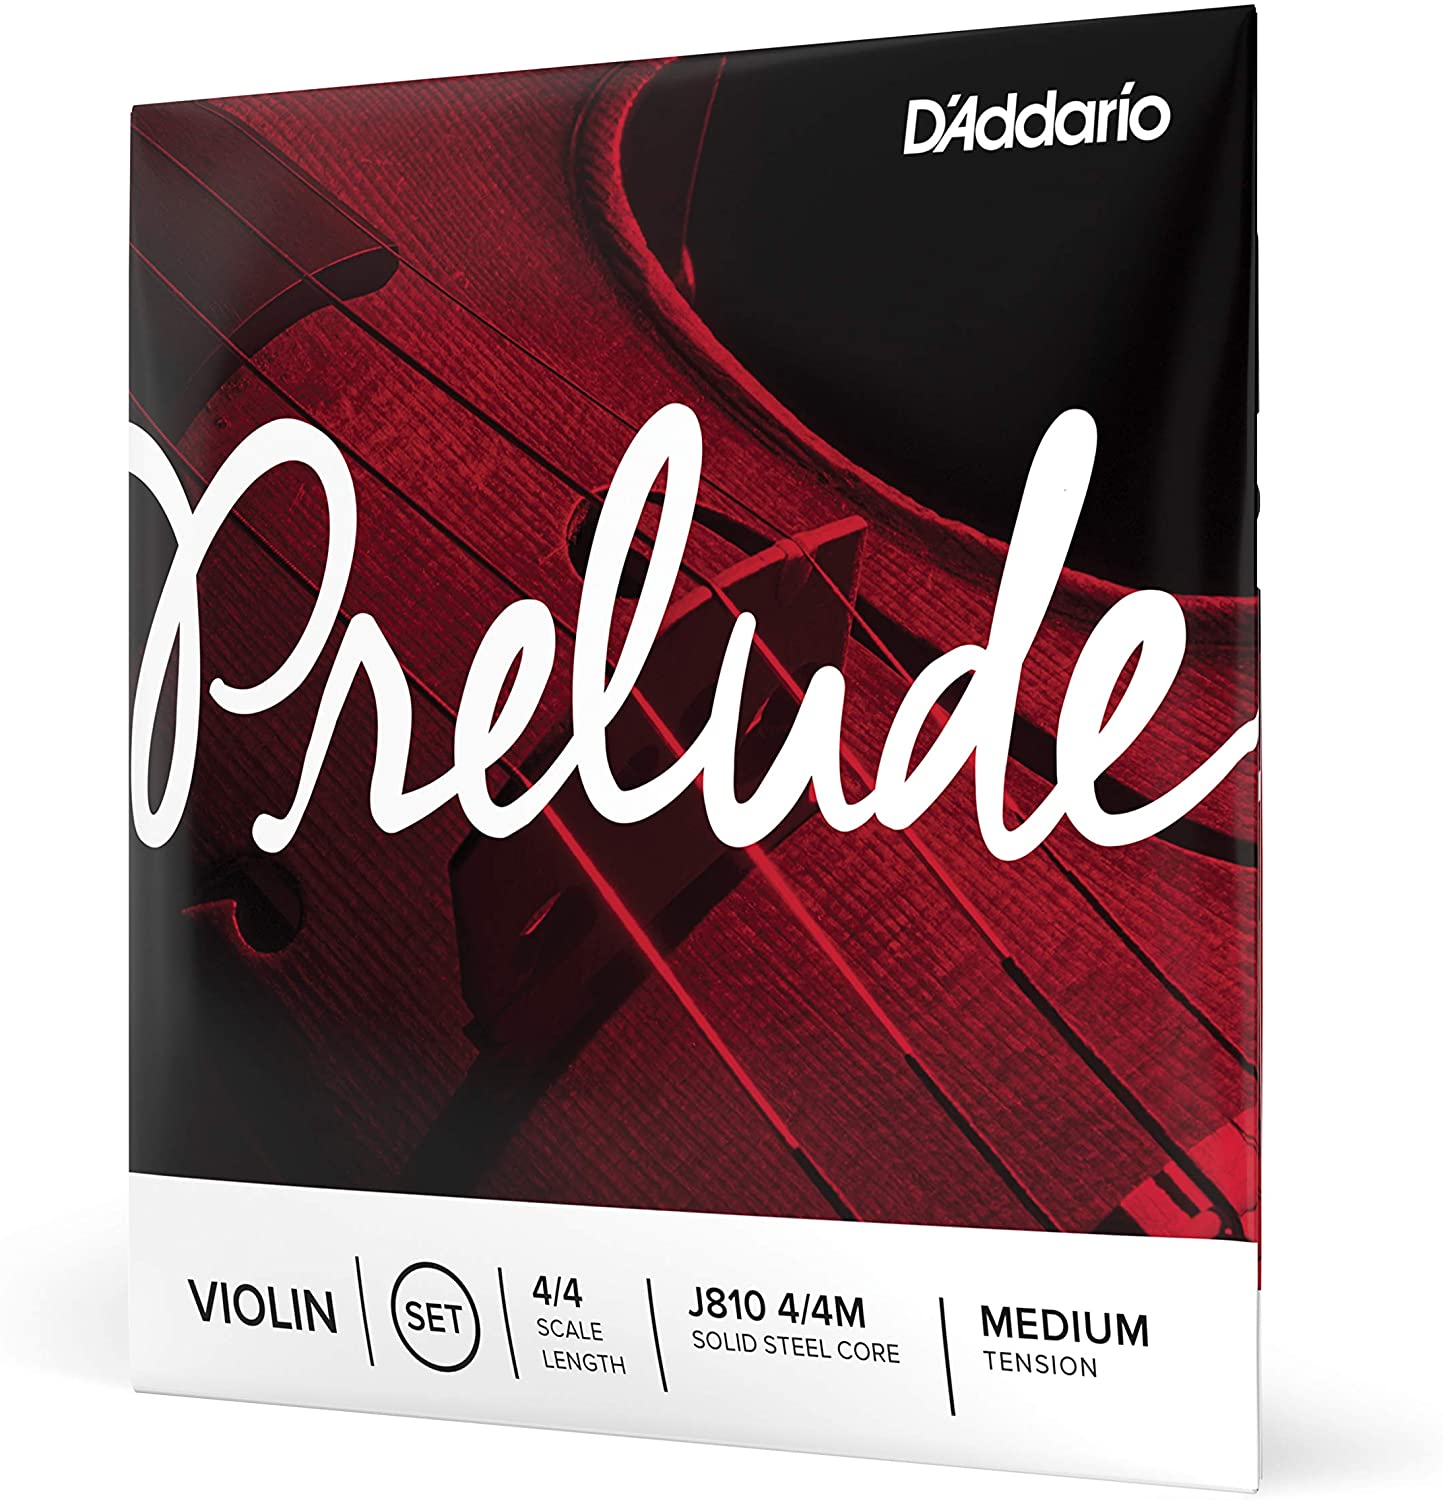 D’ Addario Prelude Violin Strings - J810 4/4M,  4/4 Scale, Medium Tension - Set of 4